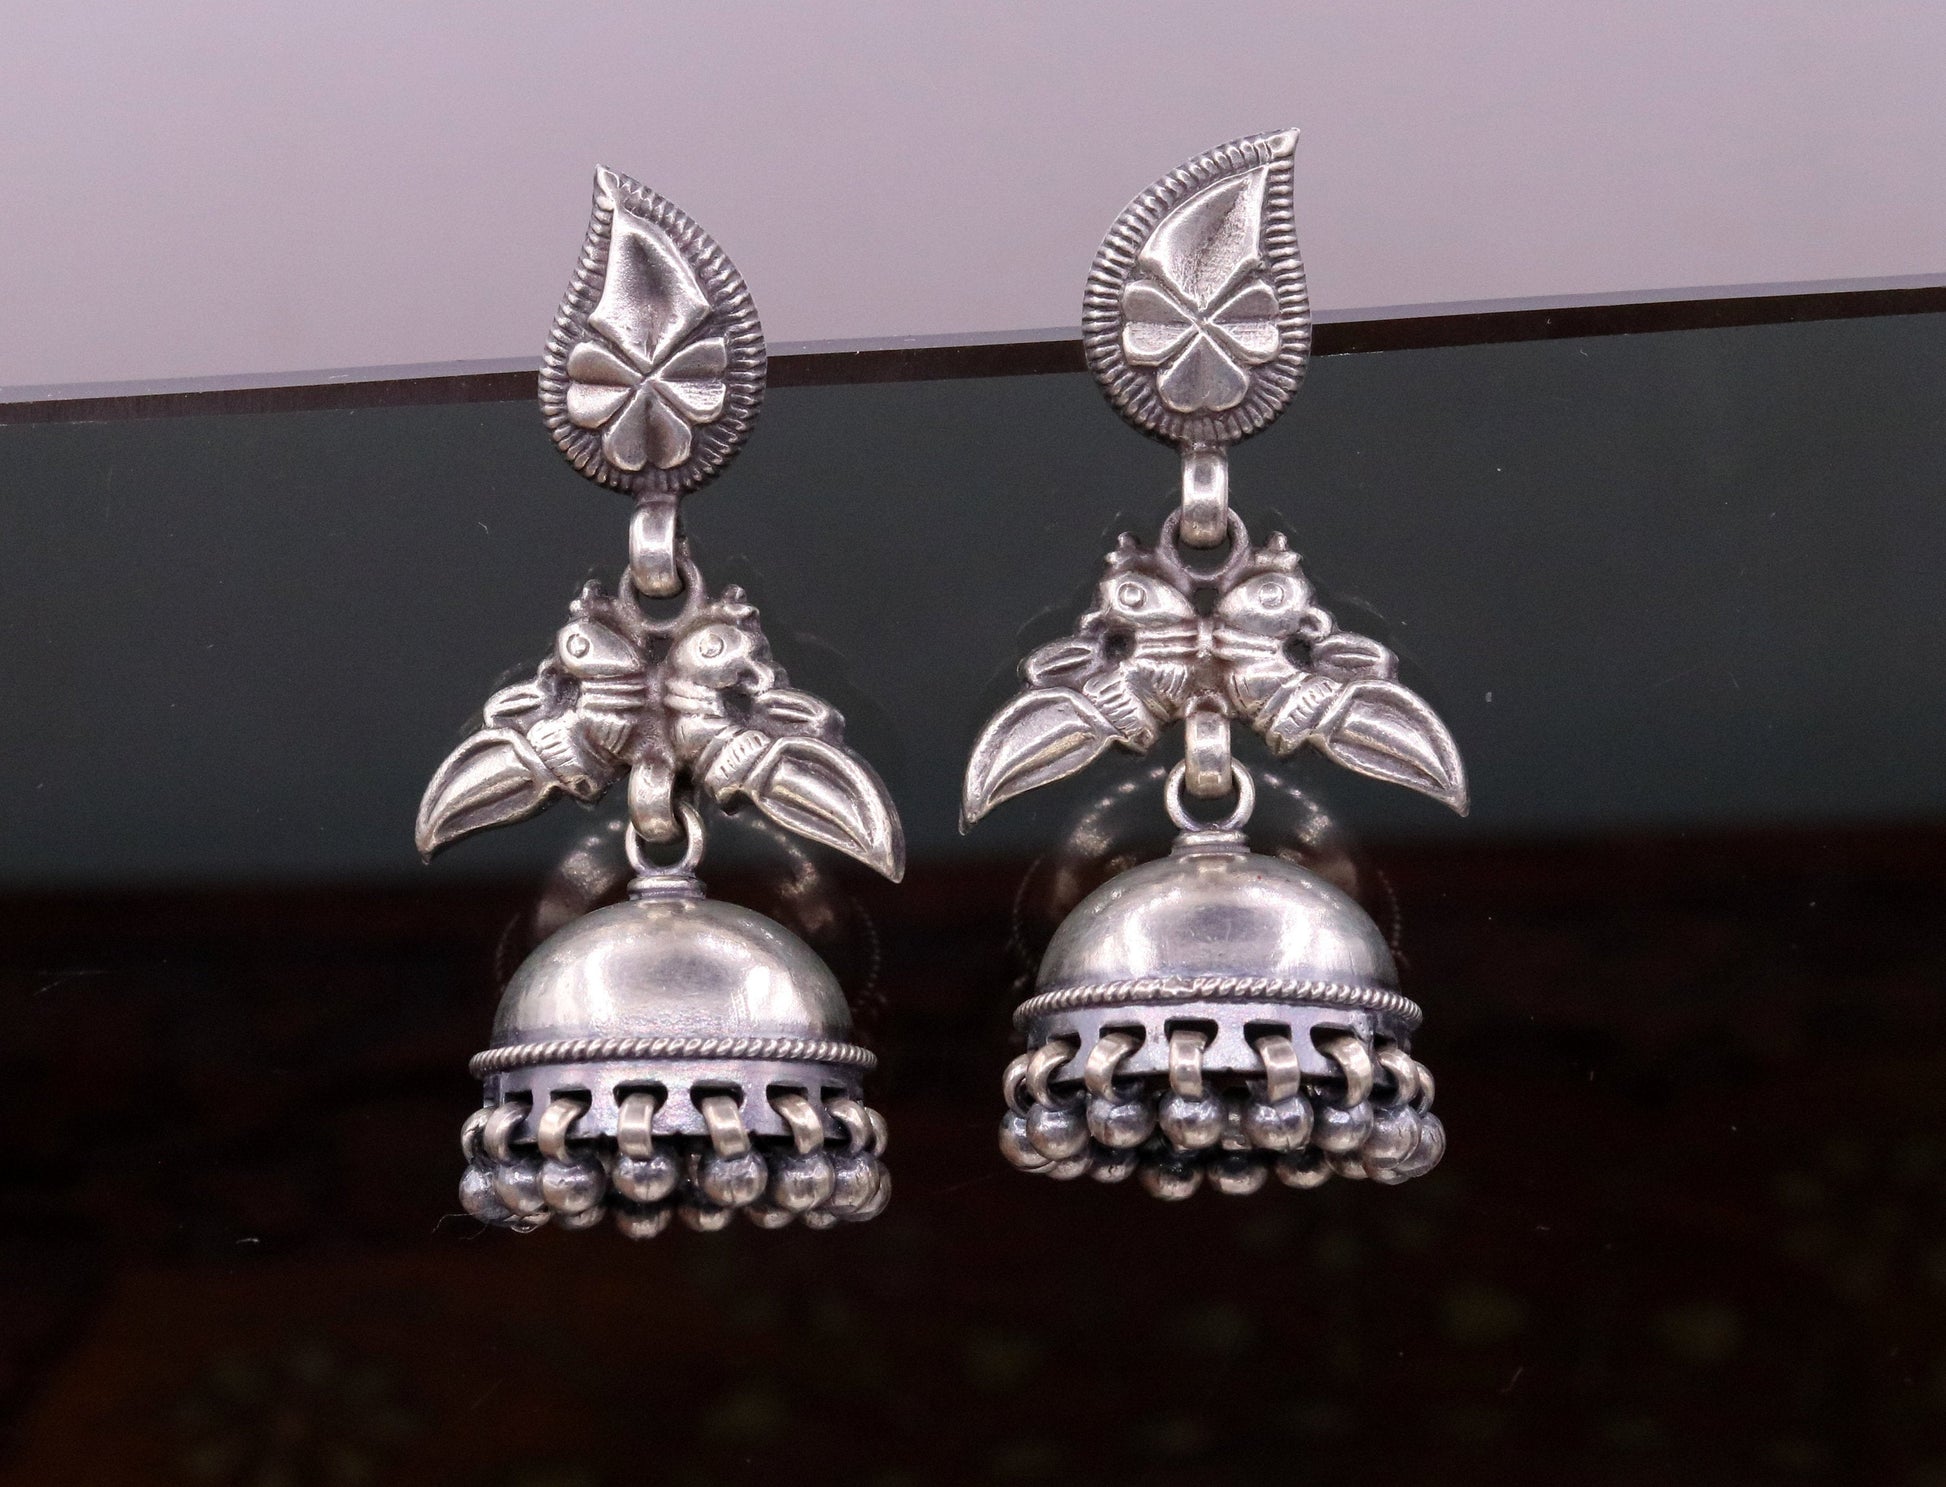 925 sterling silver vintage design handmade parrot design stud earring jhumki, light weight tribal belly dance bird earring jewelry s690 - TRIBAL ORNAMENTS